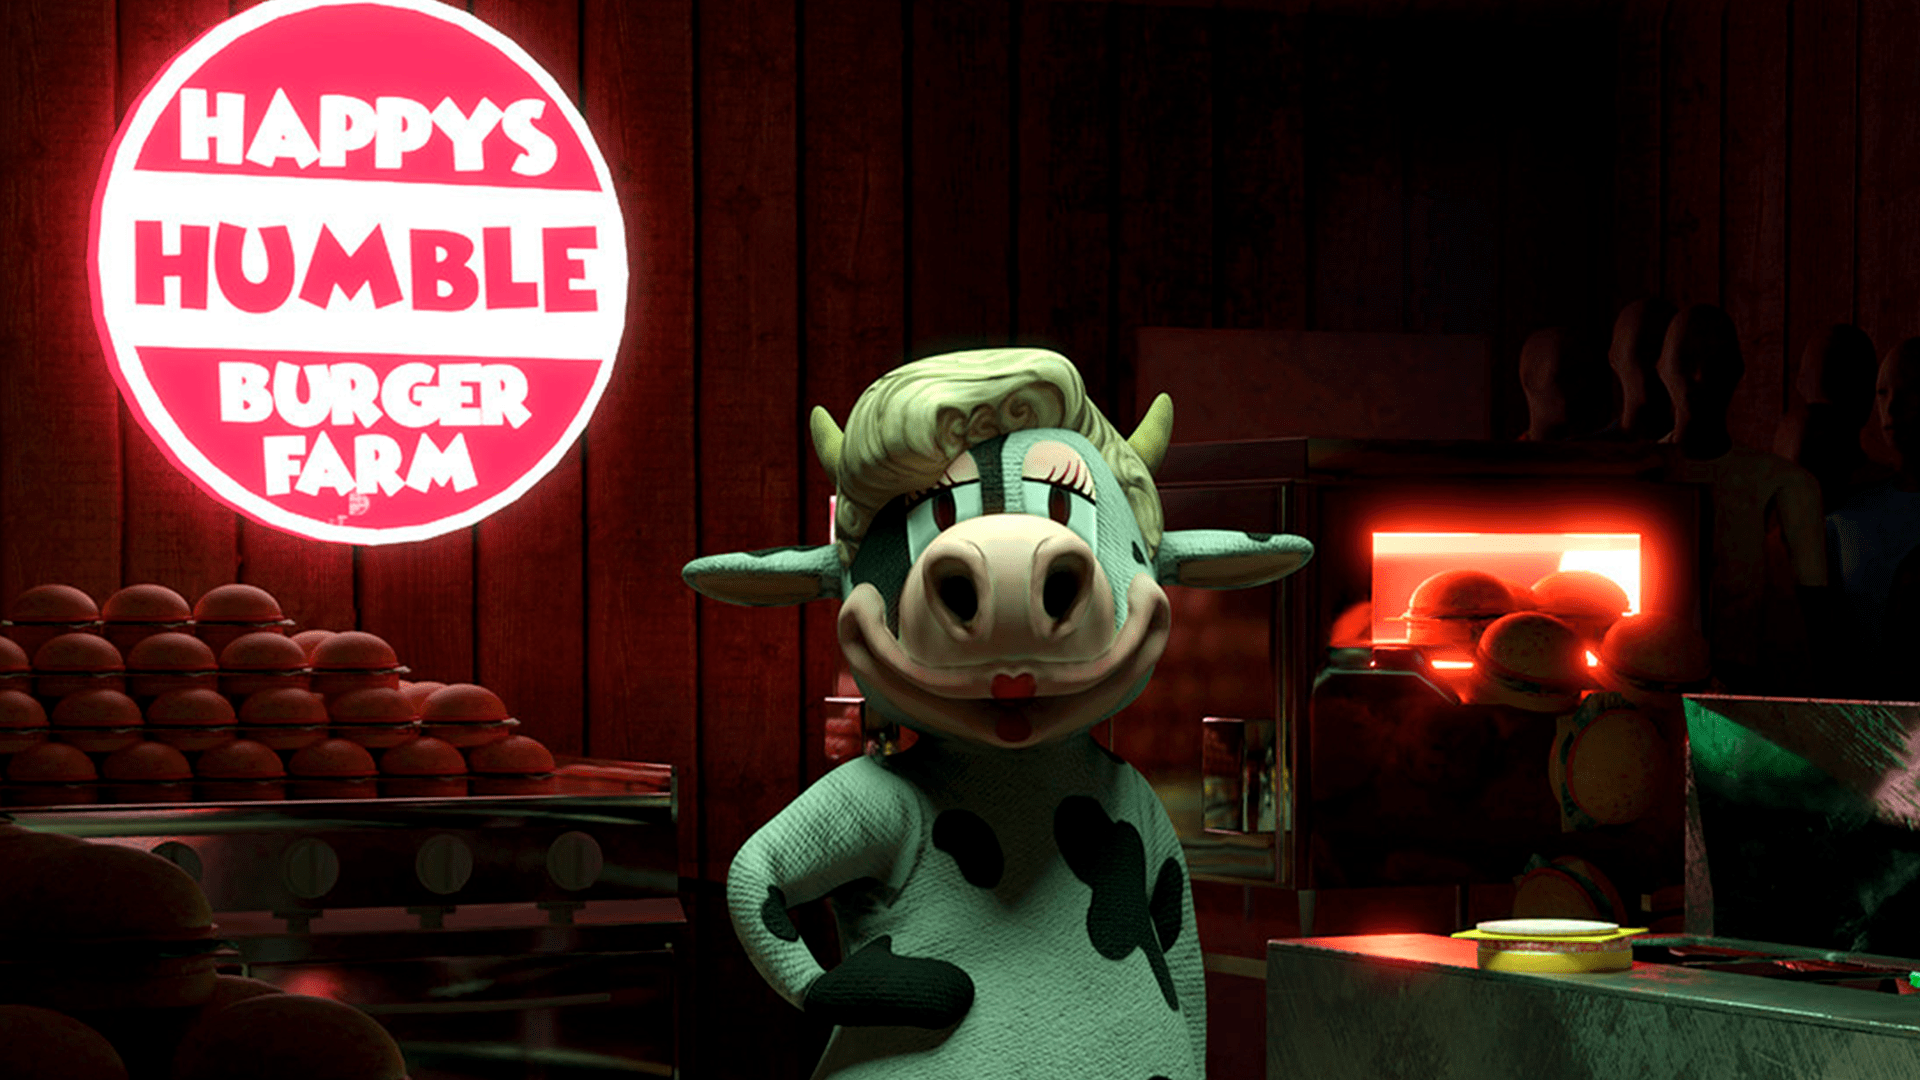 СТРАШНО И ТОЧКА ➔ Happy's Humble Burger Farm